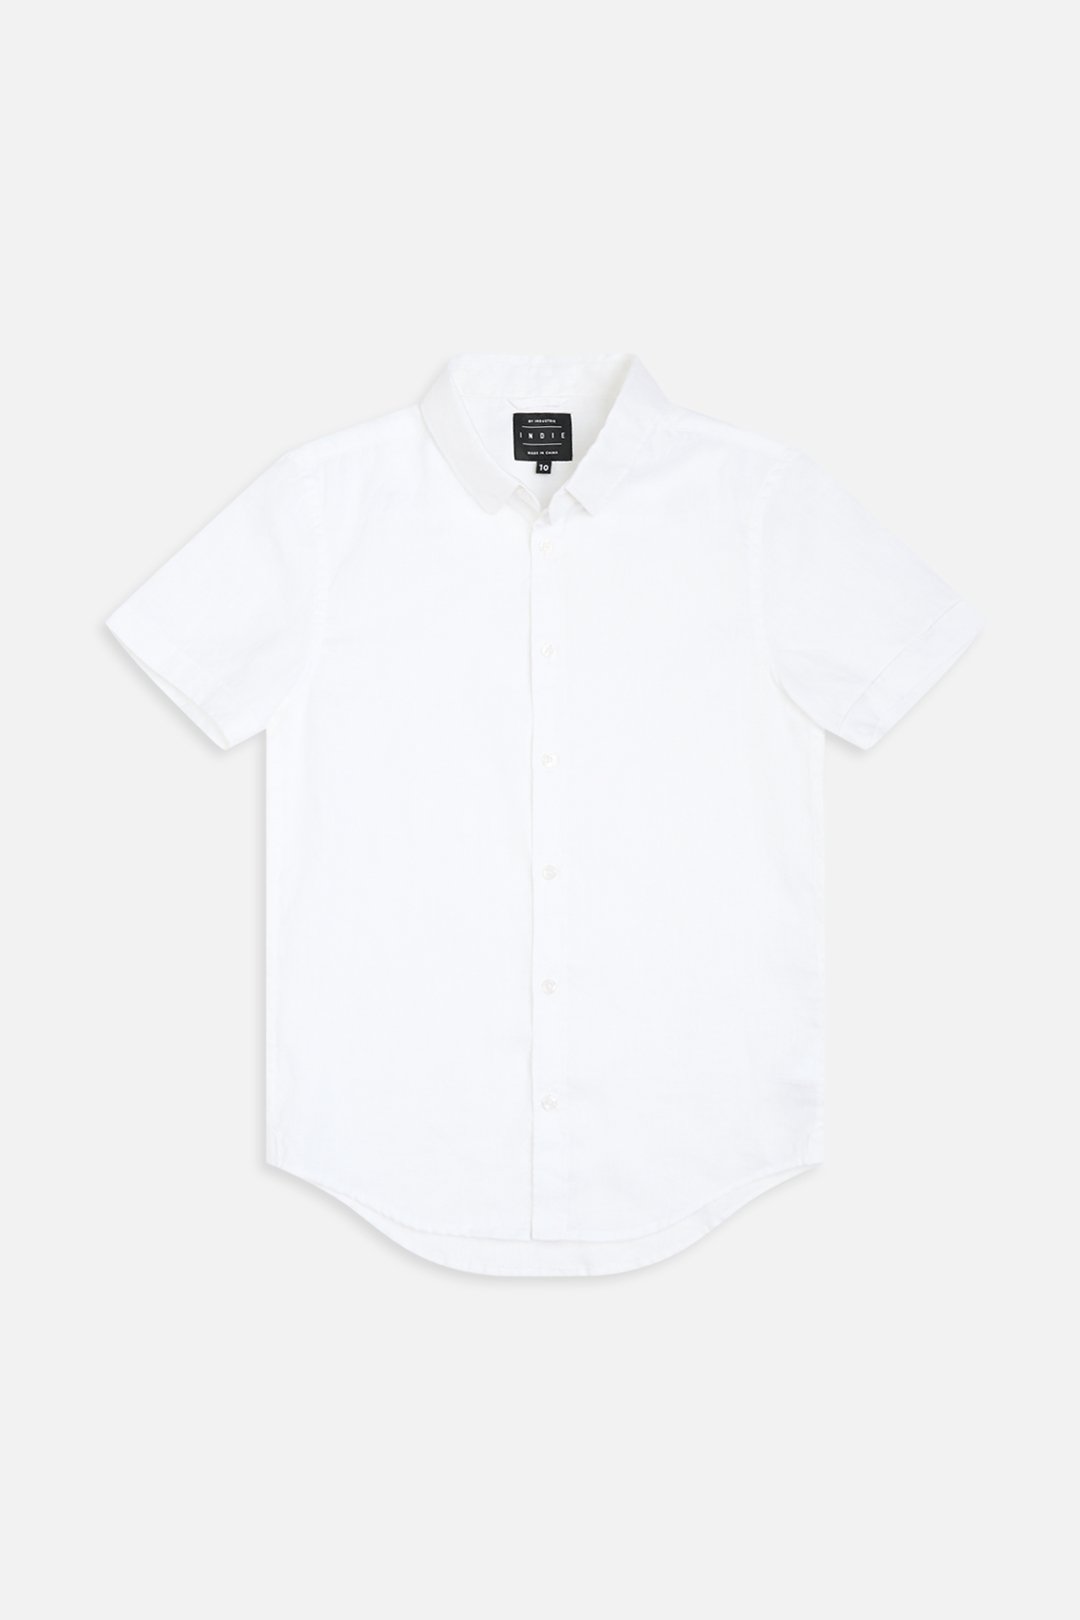 Indie Kids Tennyson SS Shirt White | Everythings Rosie